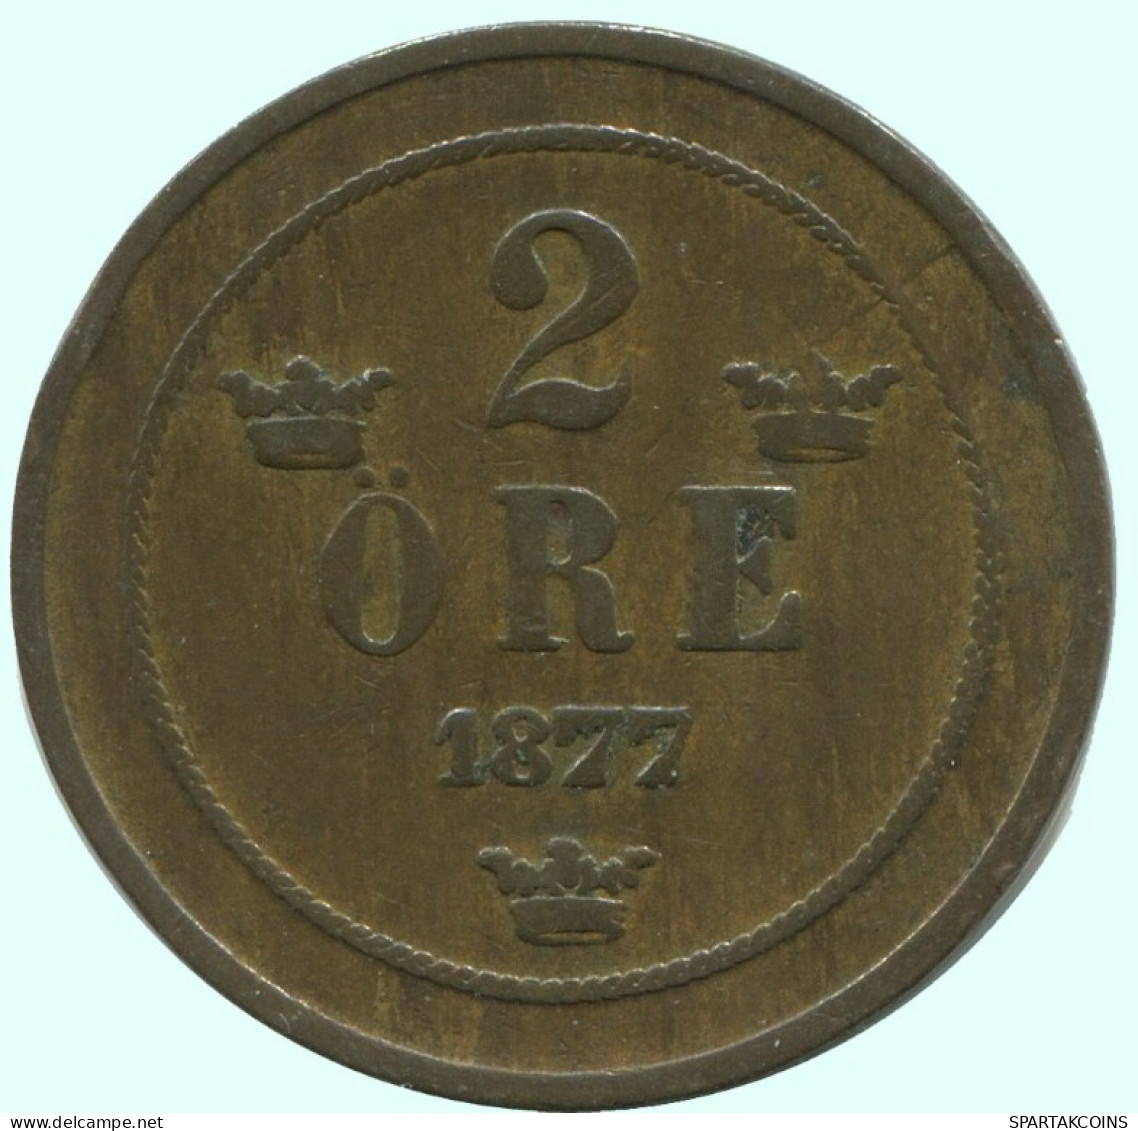 2 ORE 1877 SWEDEN Coin #AC910.2.U.A - Sweden